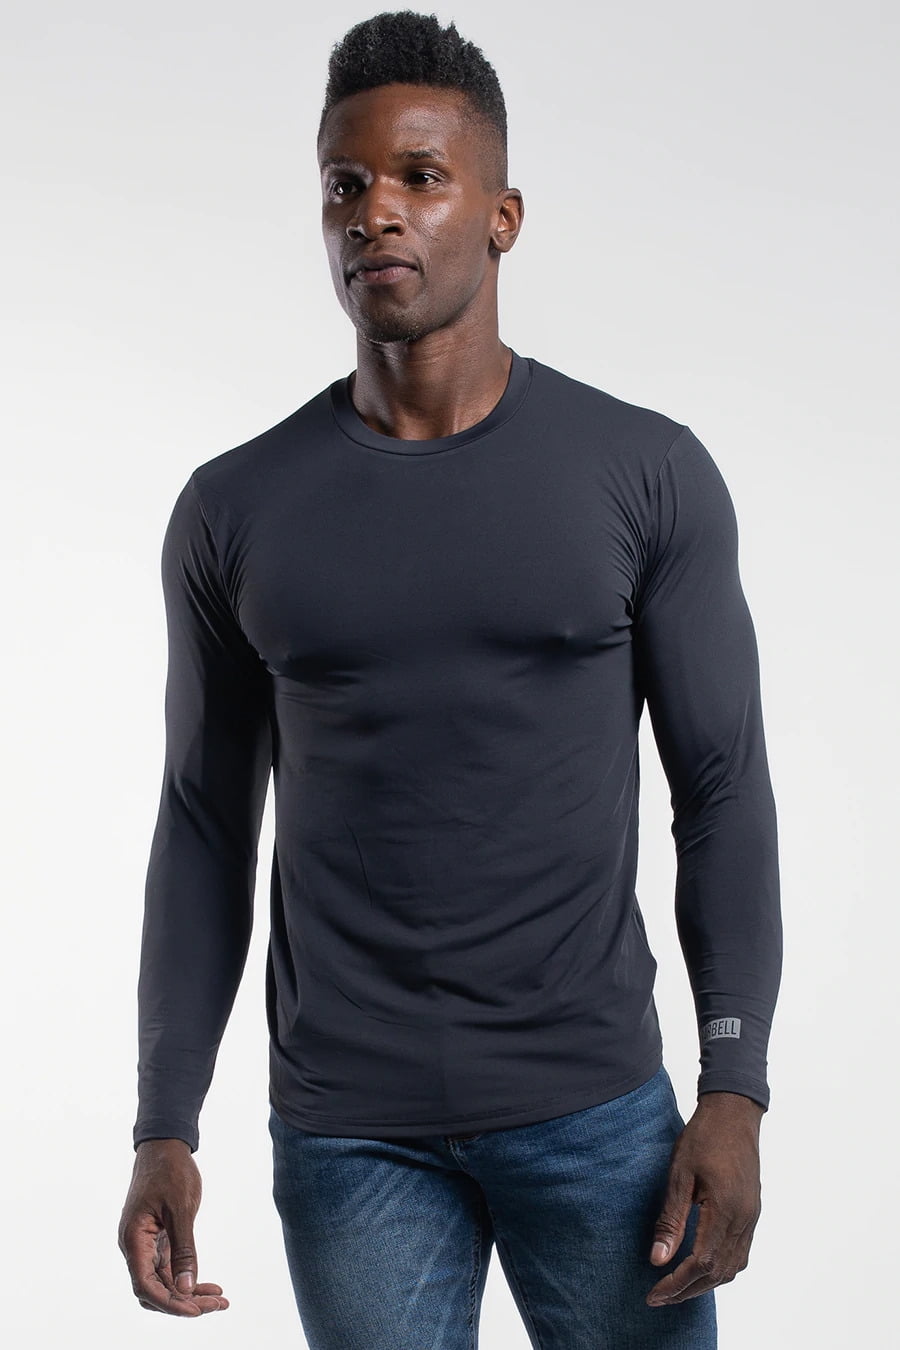 Barbell Apparel Men's Athletic Fit Havok Long Sleeve Workout Shirt 